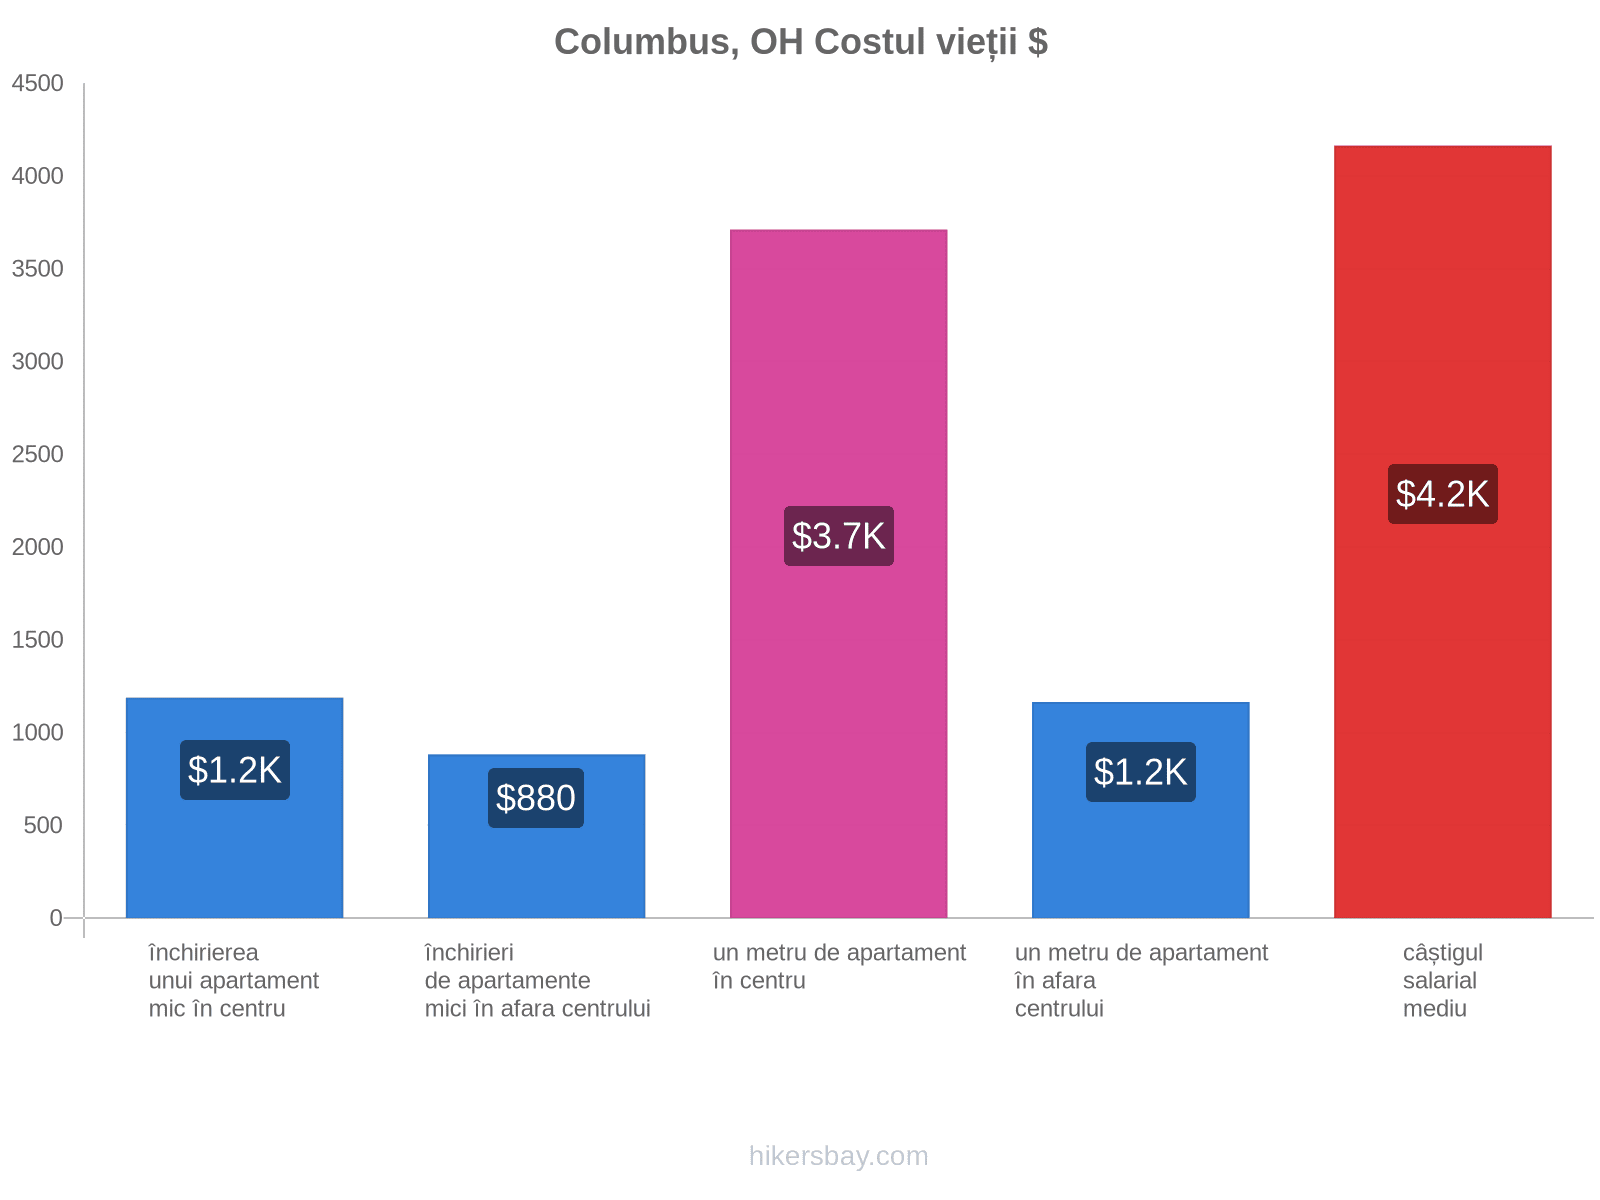 Columbus, OH costul vieții hikersbay.com